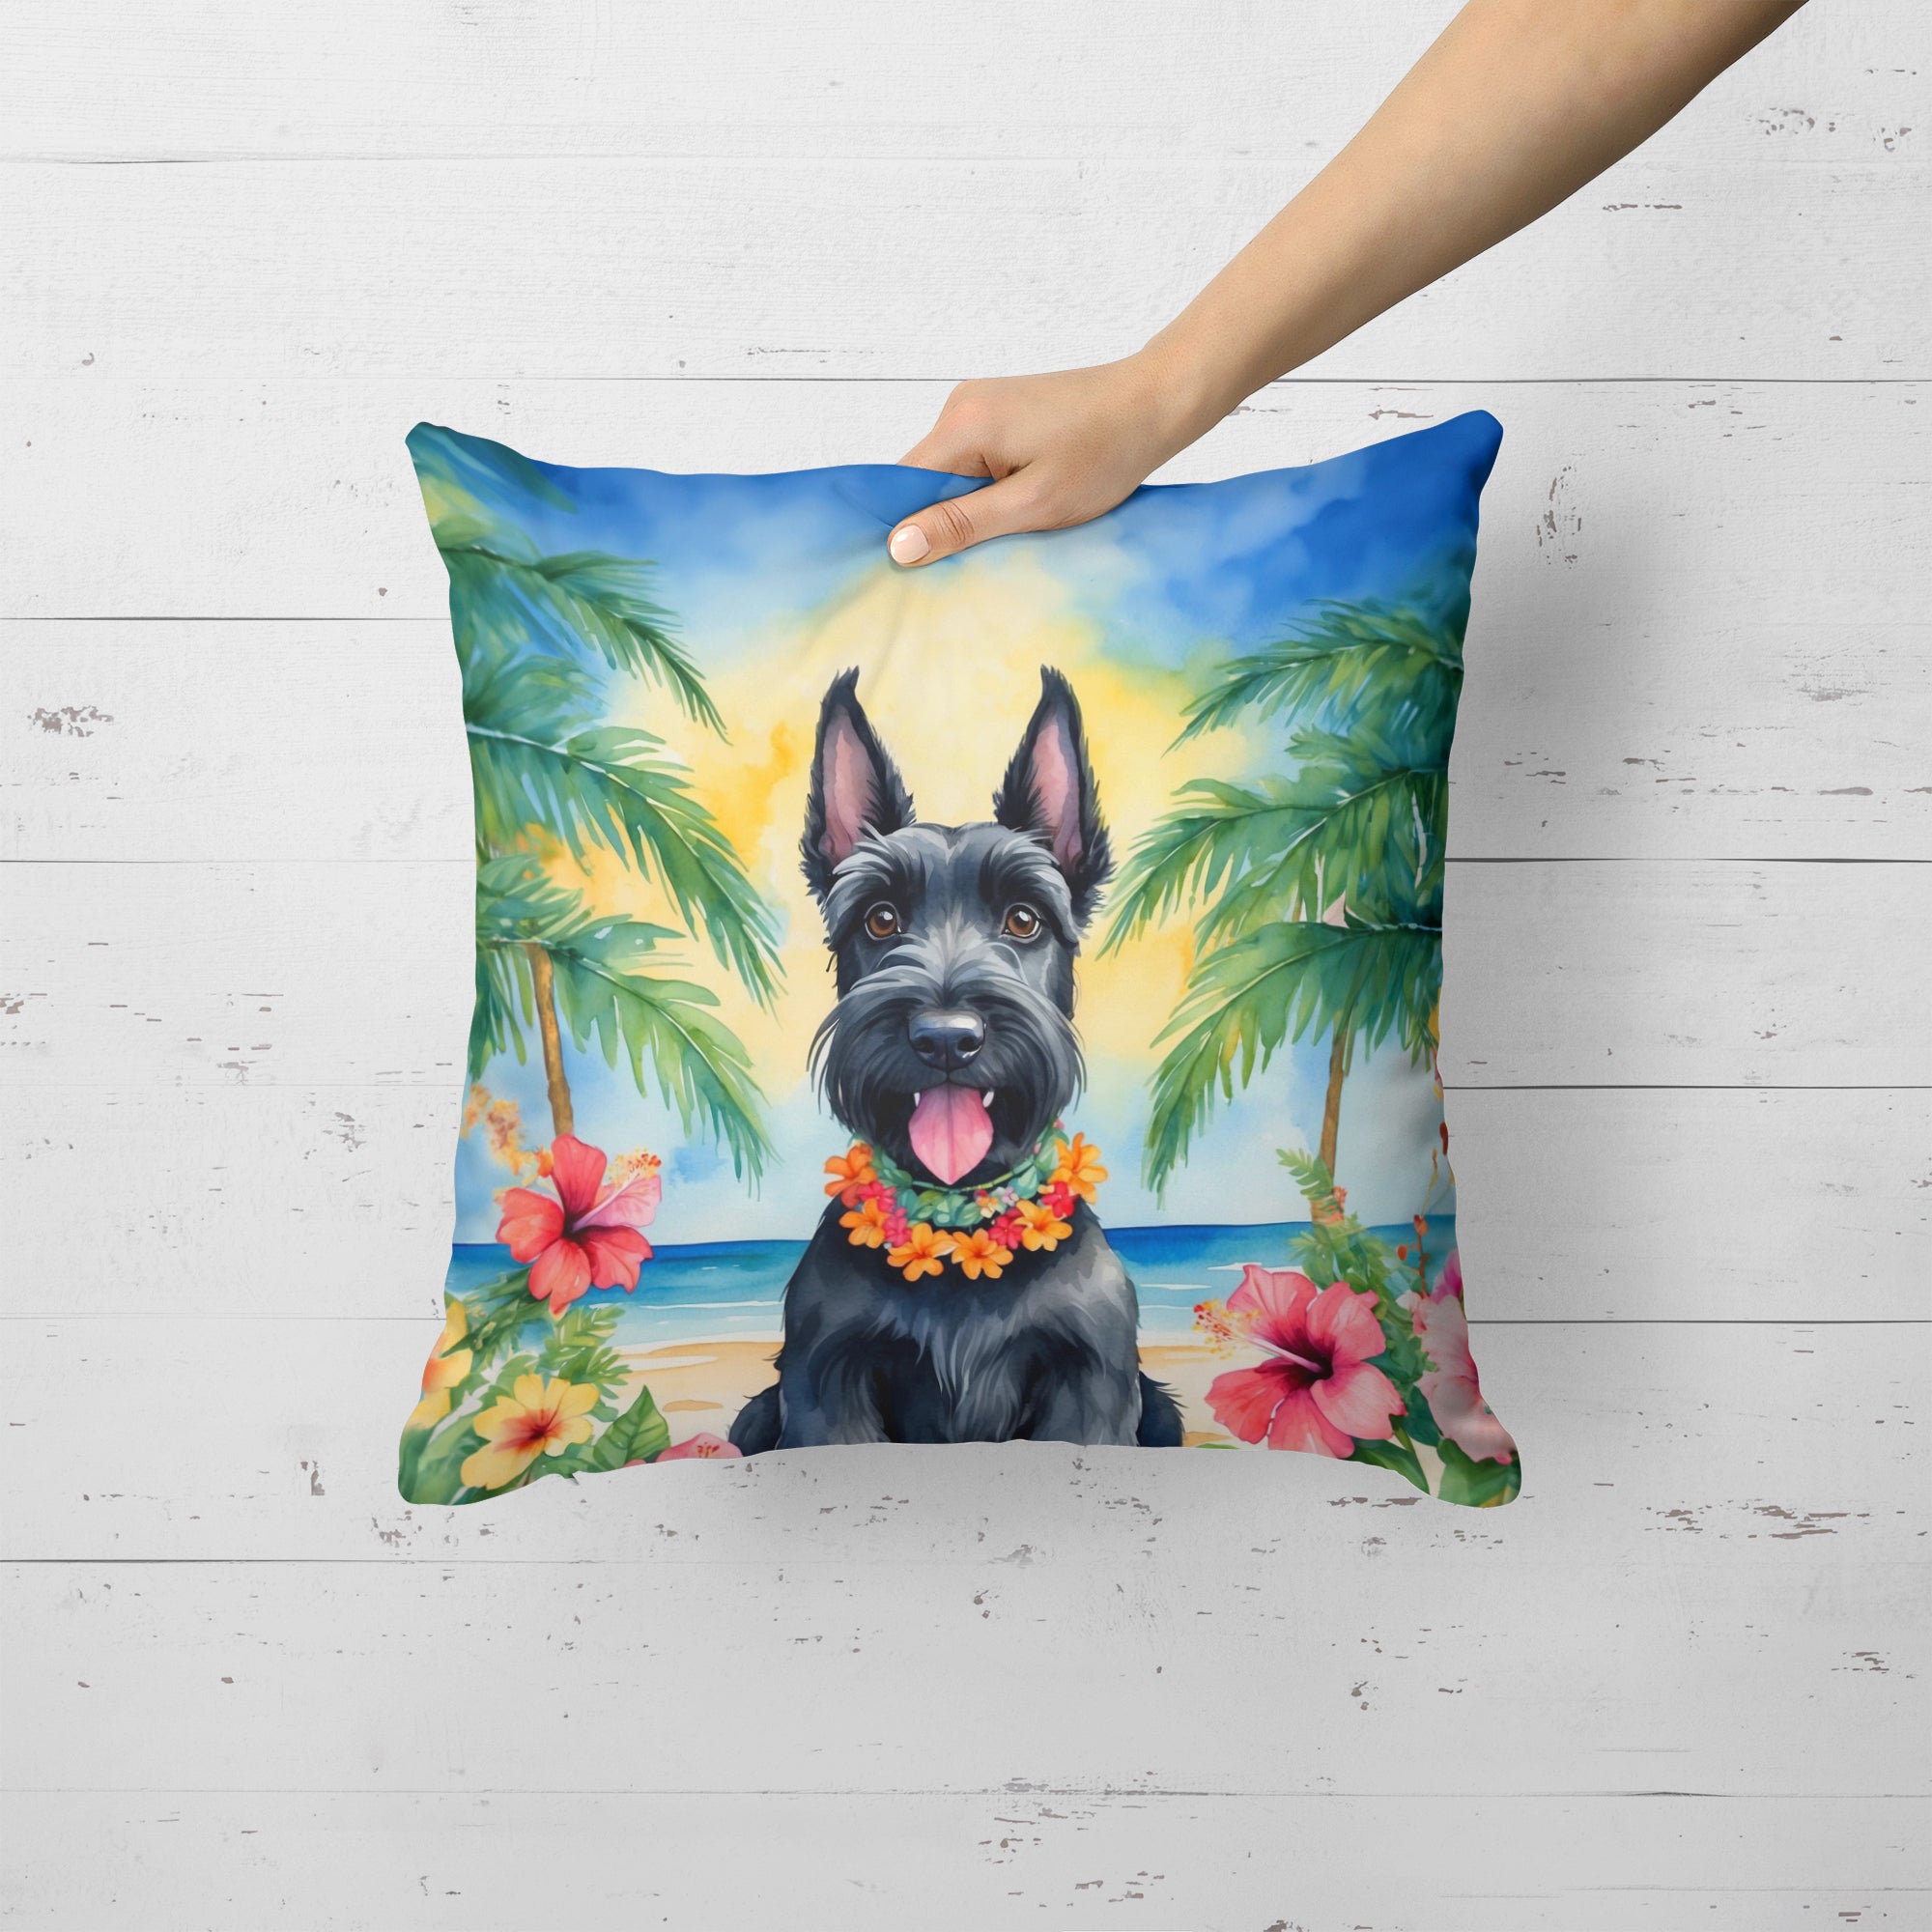 Buy this Scottish Terrier Luau Throw Pillow